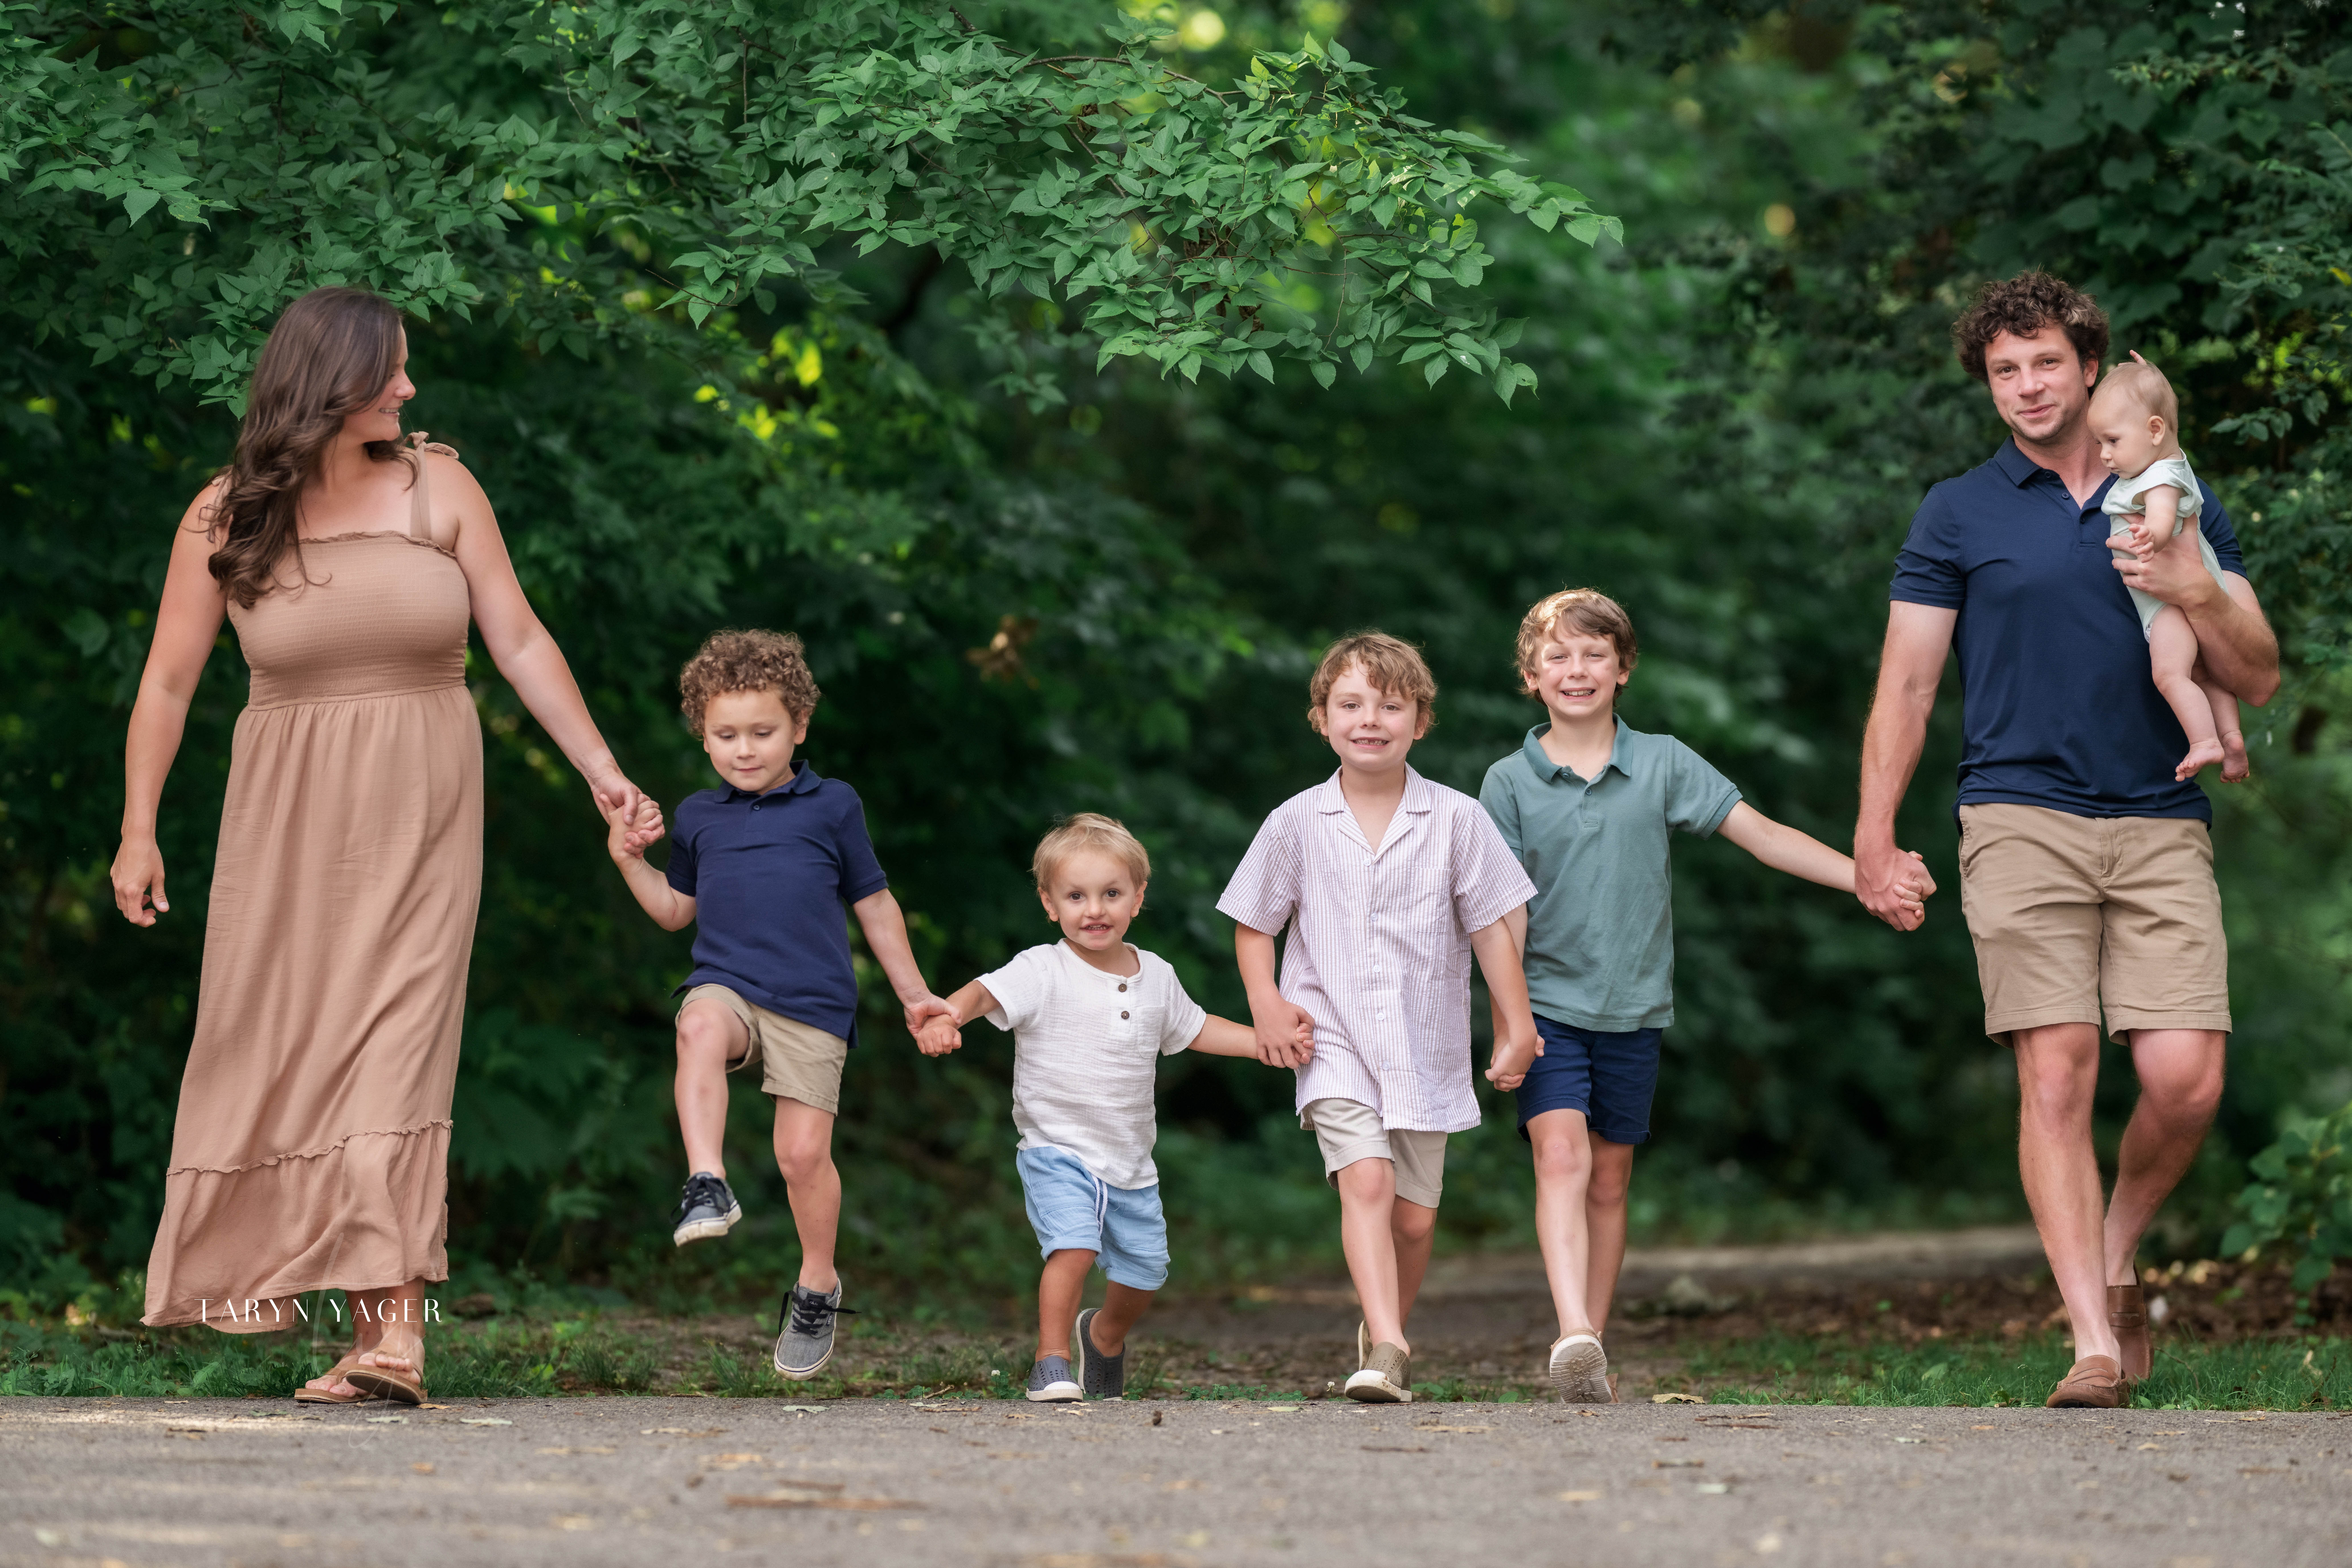 Knoxville newborn photographer - outdoor family photos